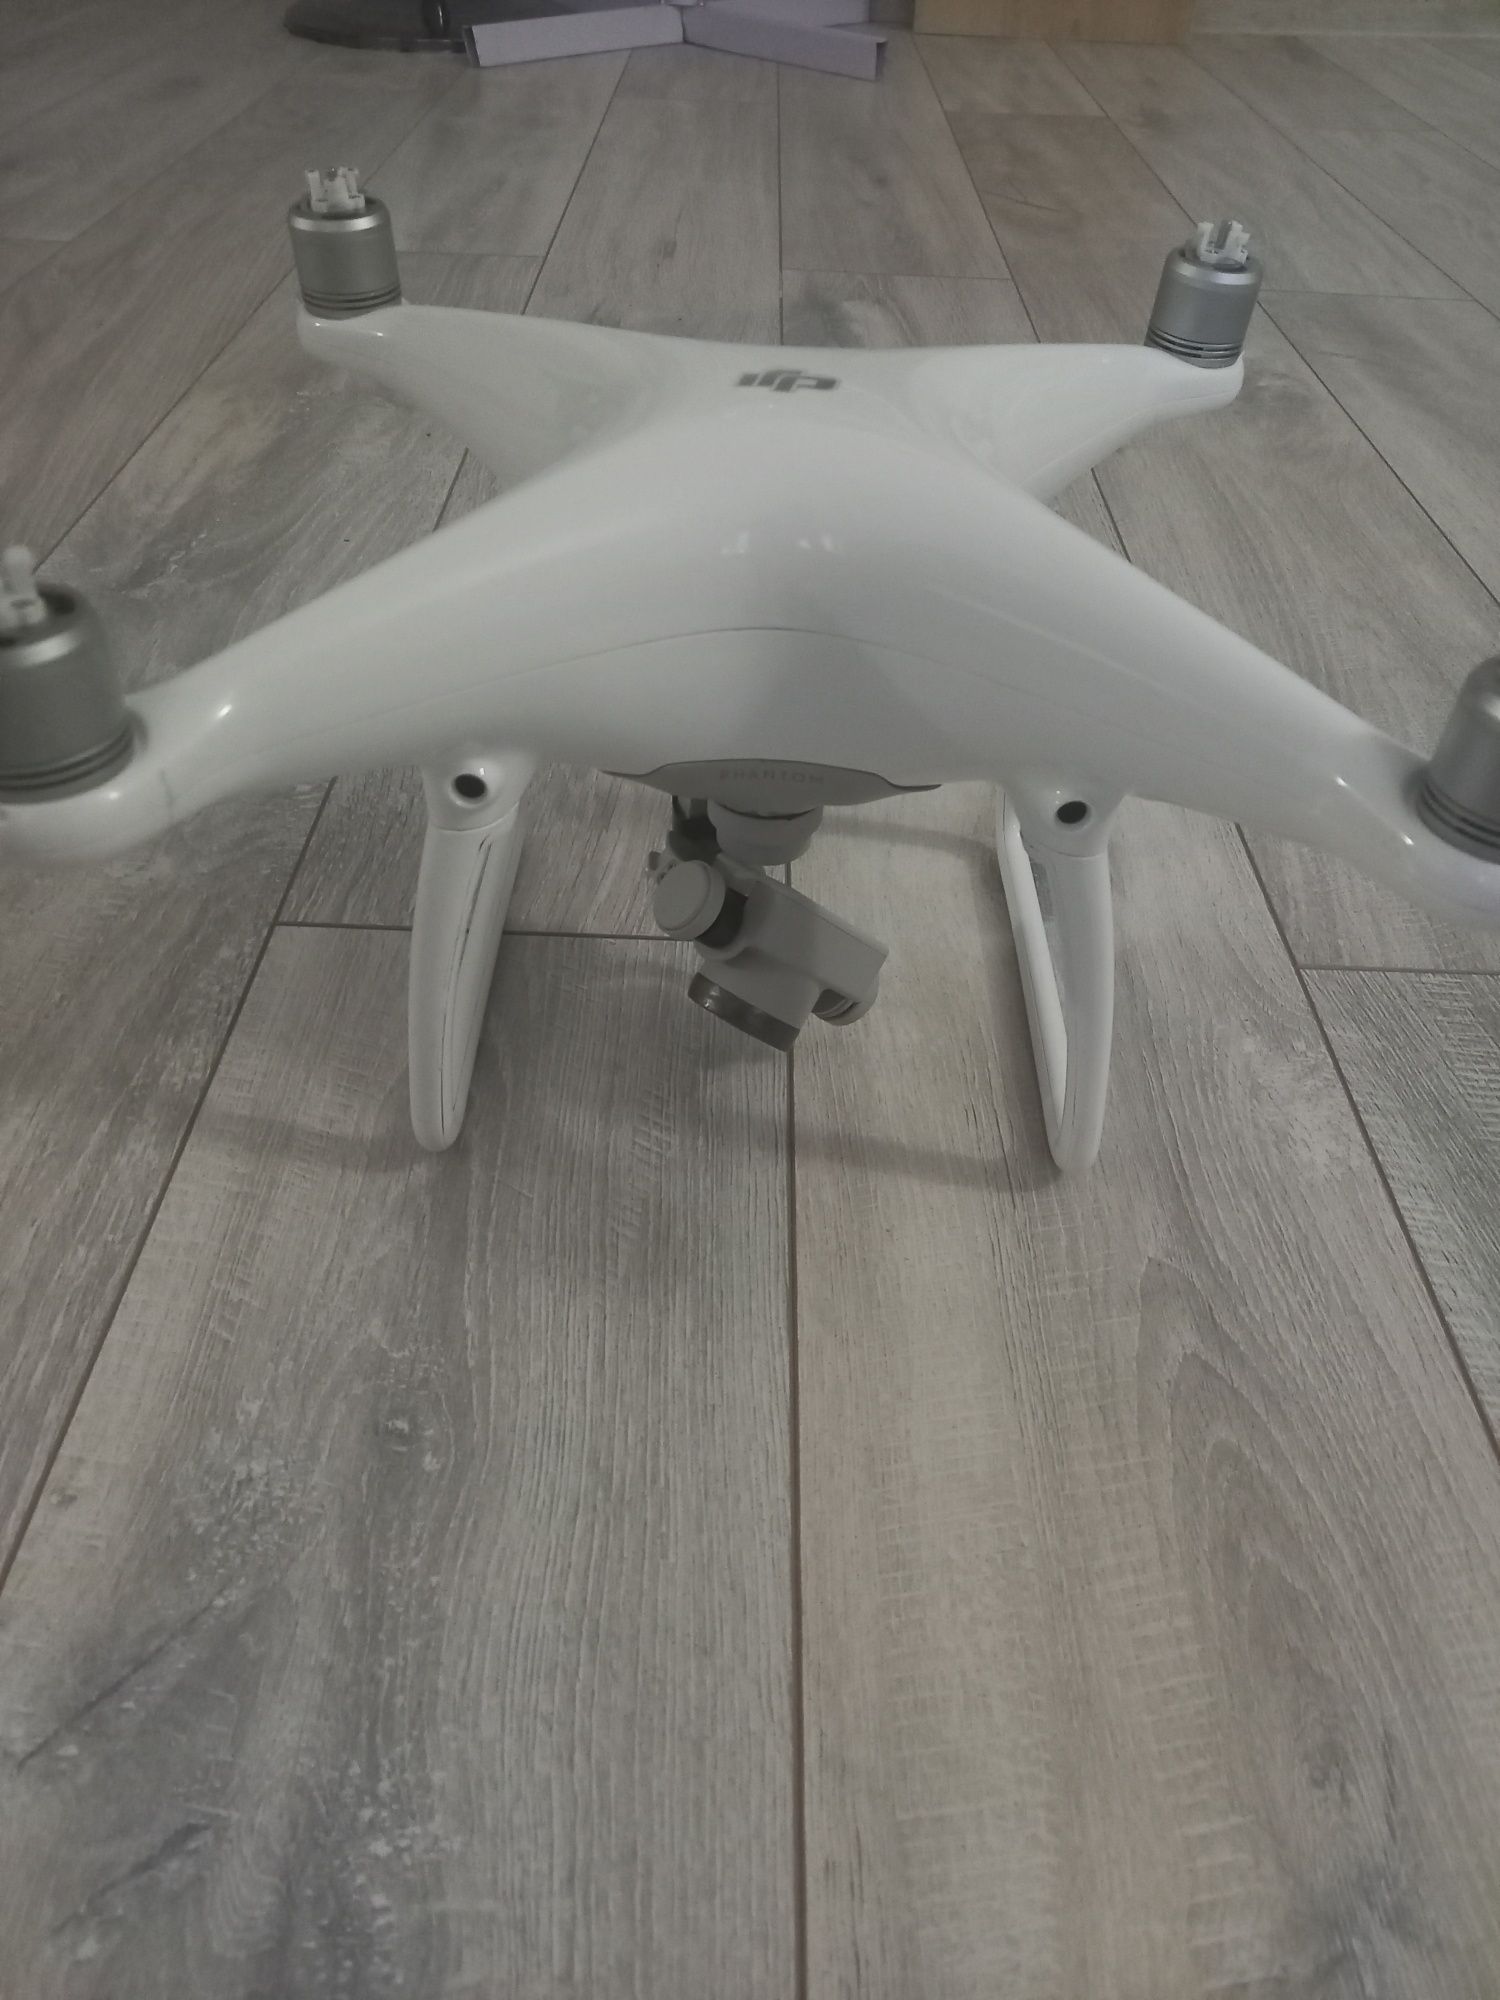 Dron standard Phantom 4